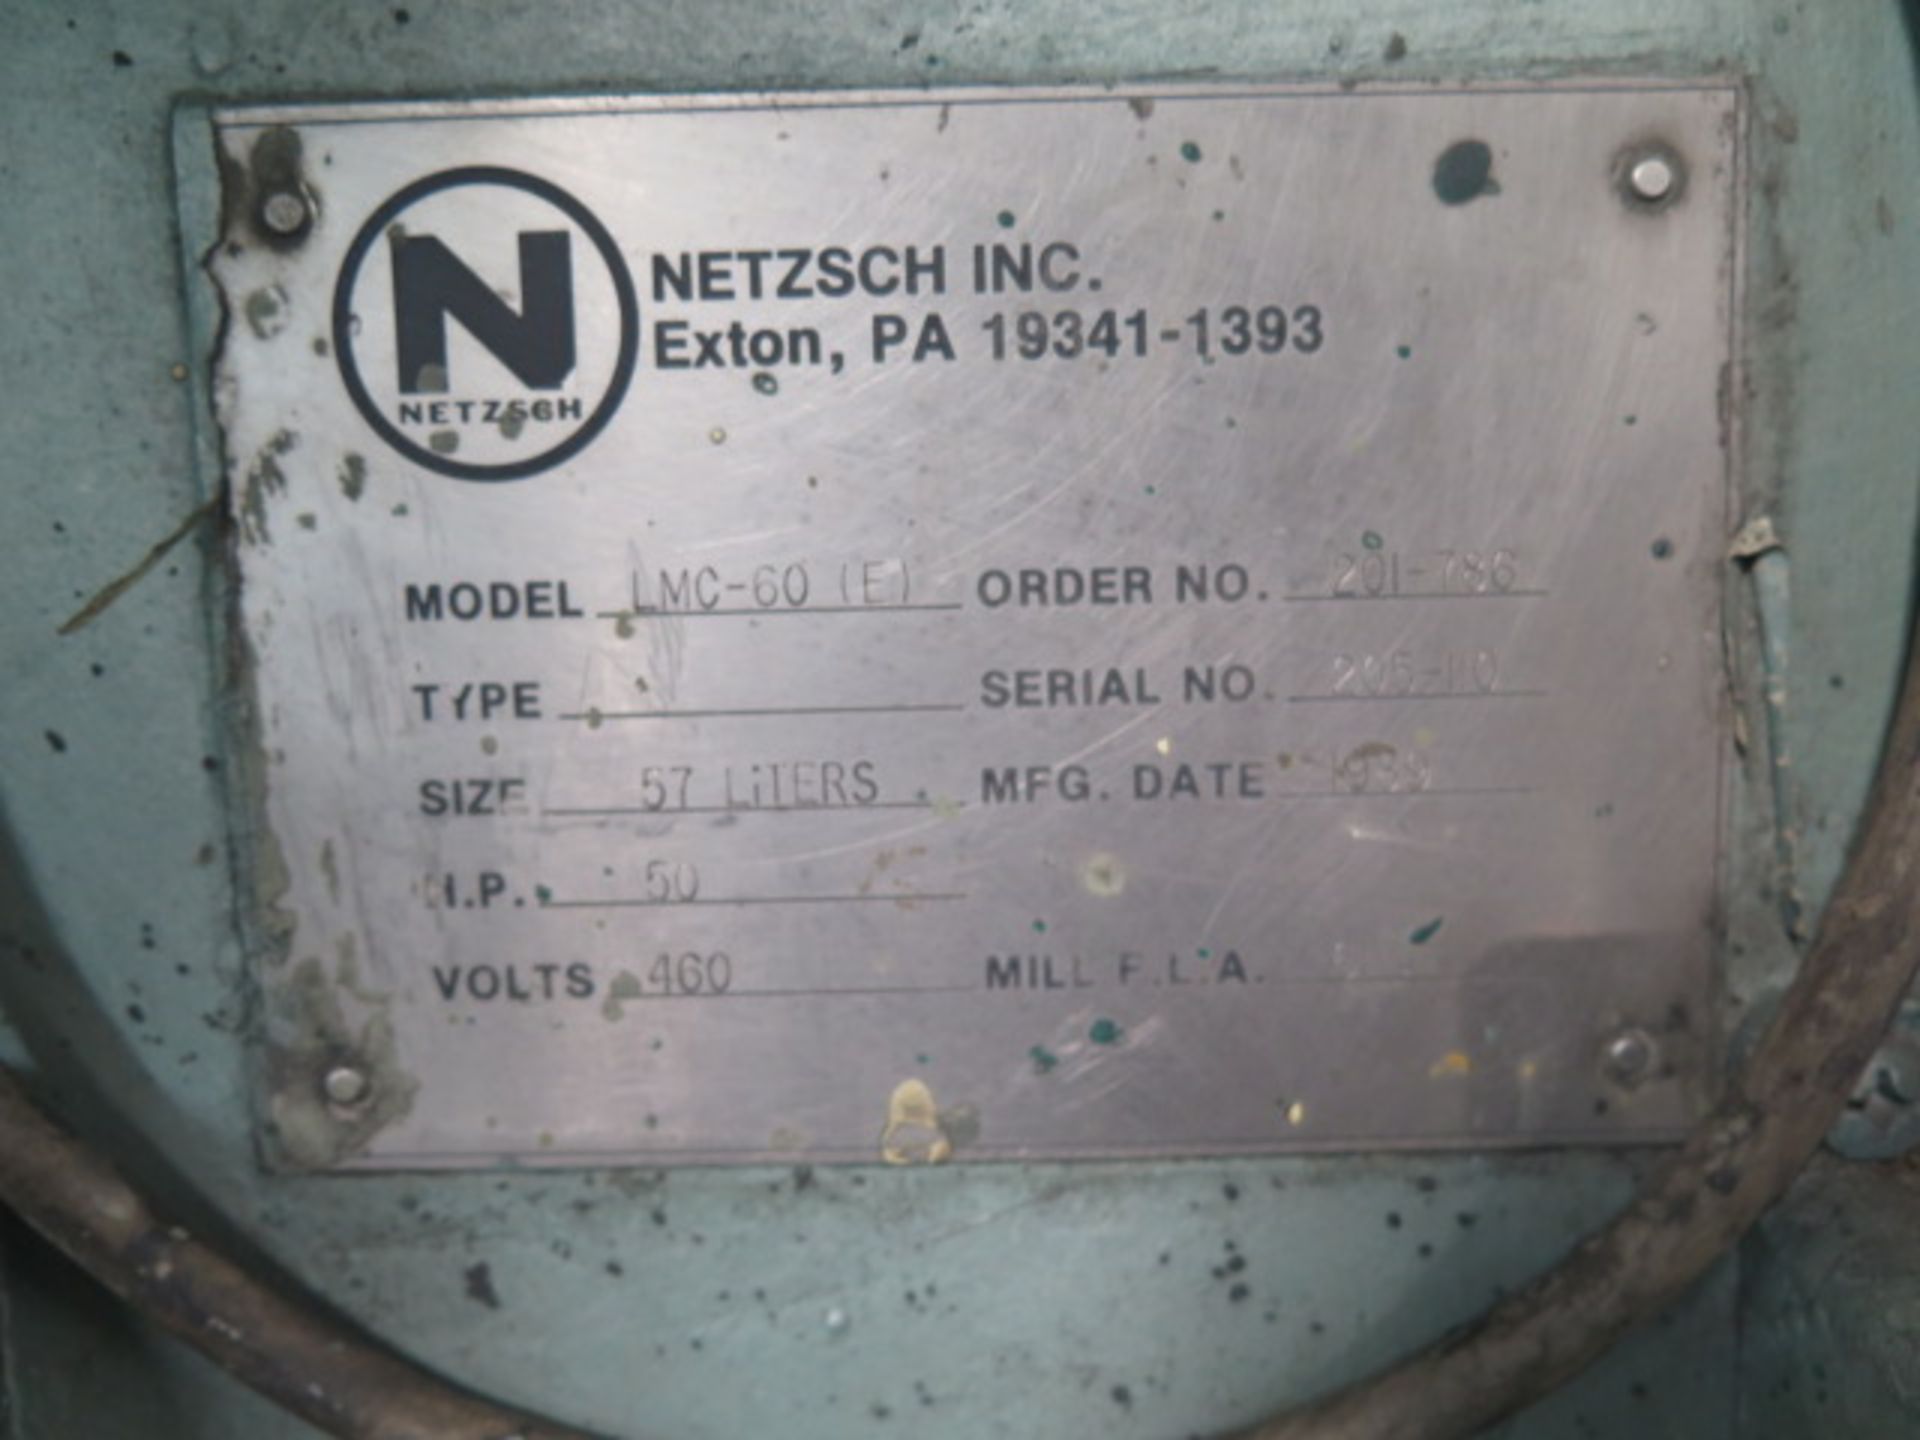 Netzsch LMC 60-(E) 57 Liter Horizontal Grinding Mill s/n 205-110 (SOLD AS-IS - NO WARRANTY) - Image 11 of 11